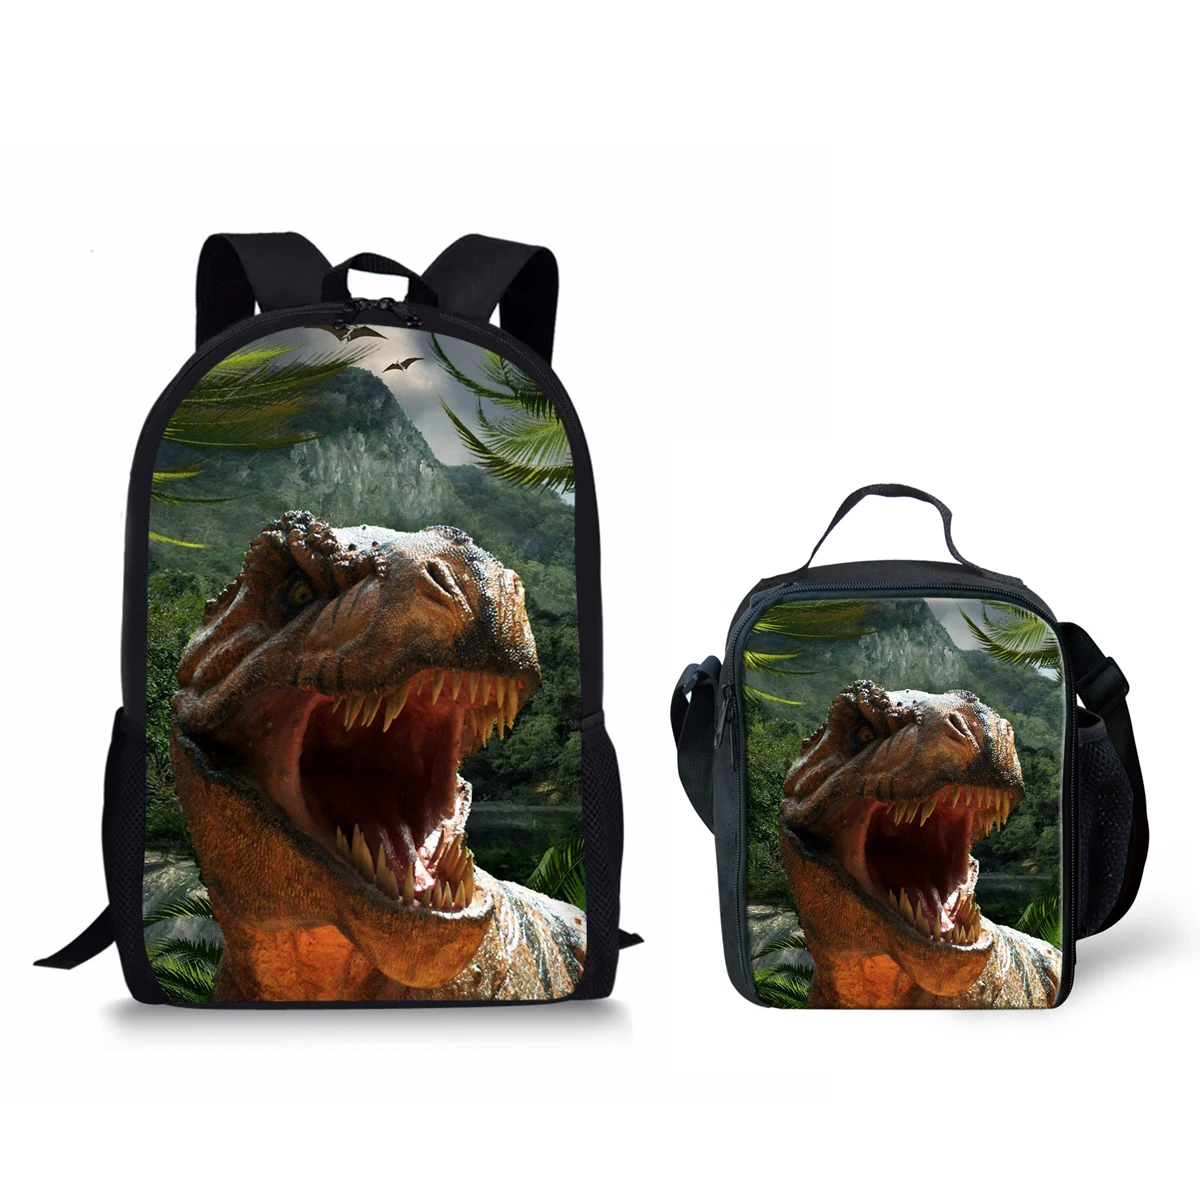 ADVOCATOR Ferocious Dinosaur Design Boys School Bags Set Cool Students Mochila 2pcs Customize Children Backpacks Free Shipping